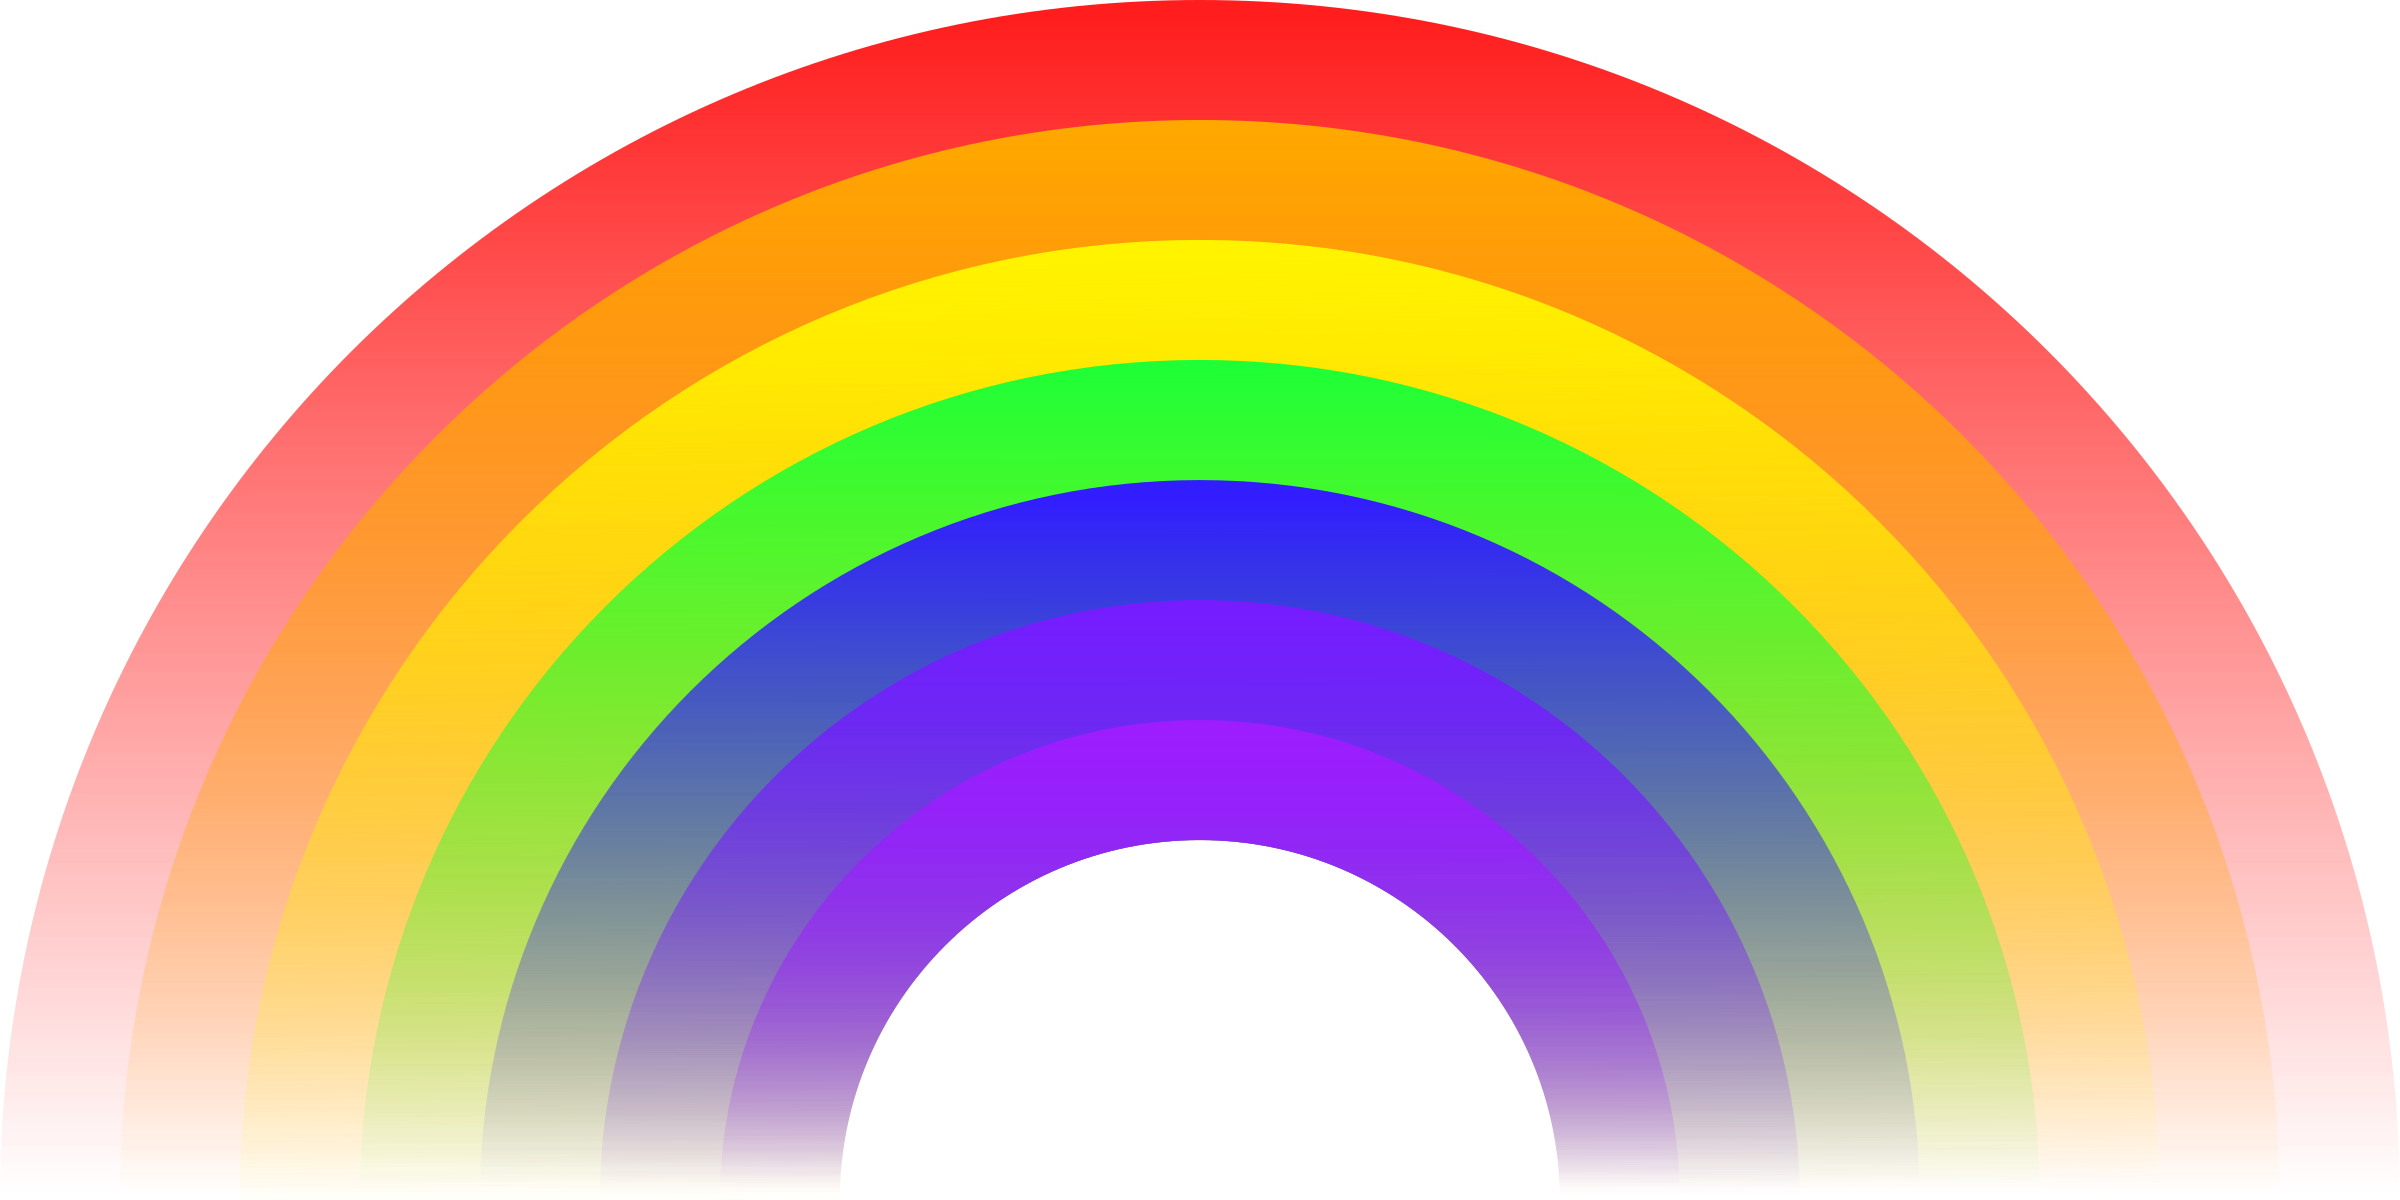 Blurry Rainbow Transparent Images